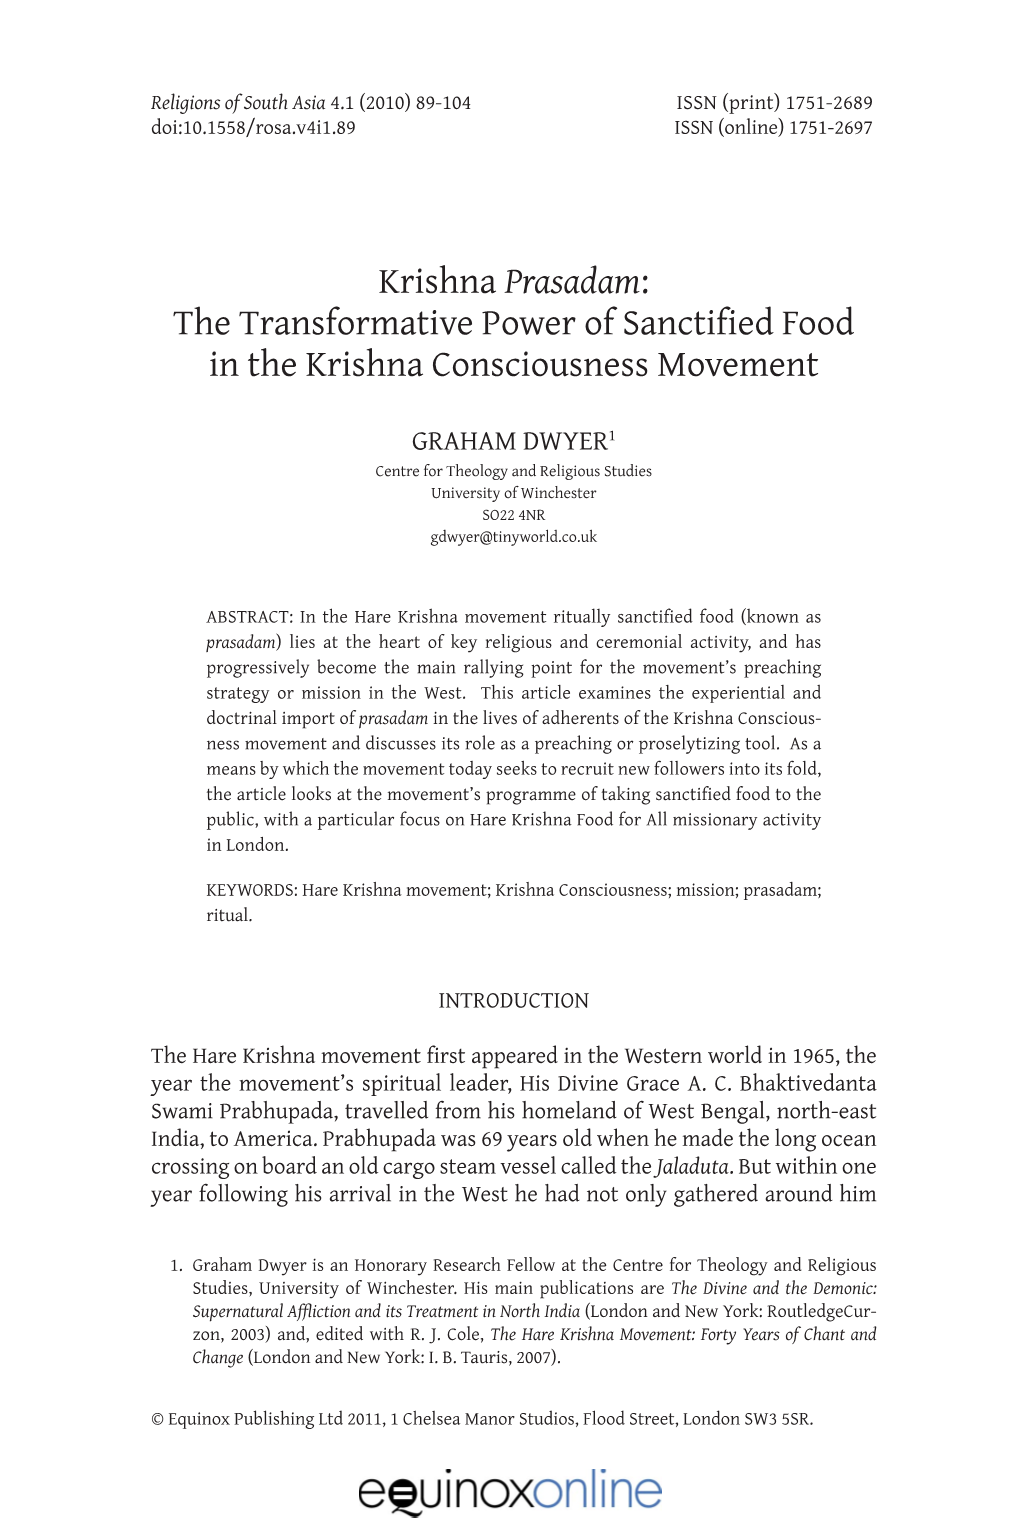 Krishna Prasadam: the Transformative Power of Sanctified Food in the Krishna Consciousness Movement